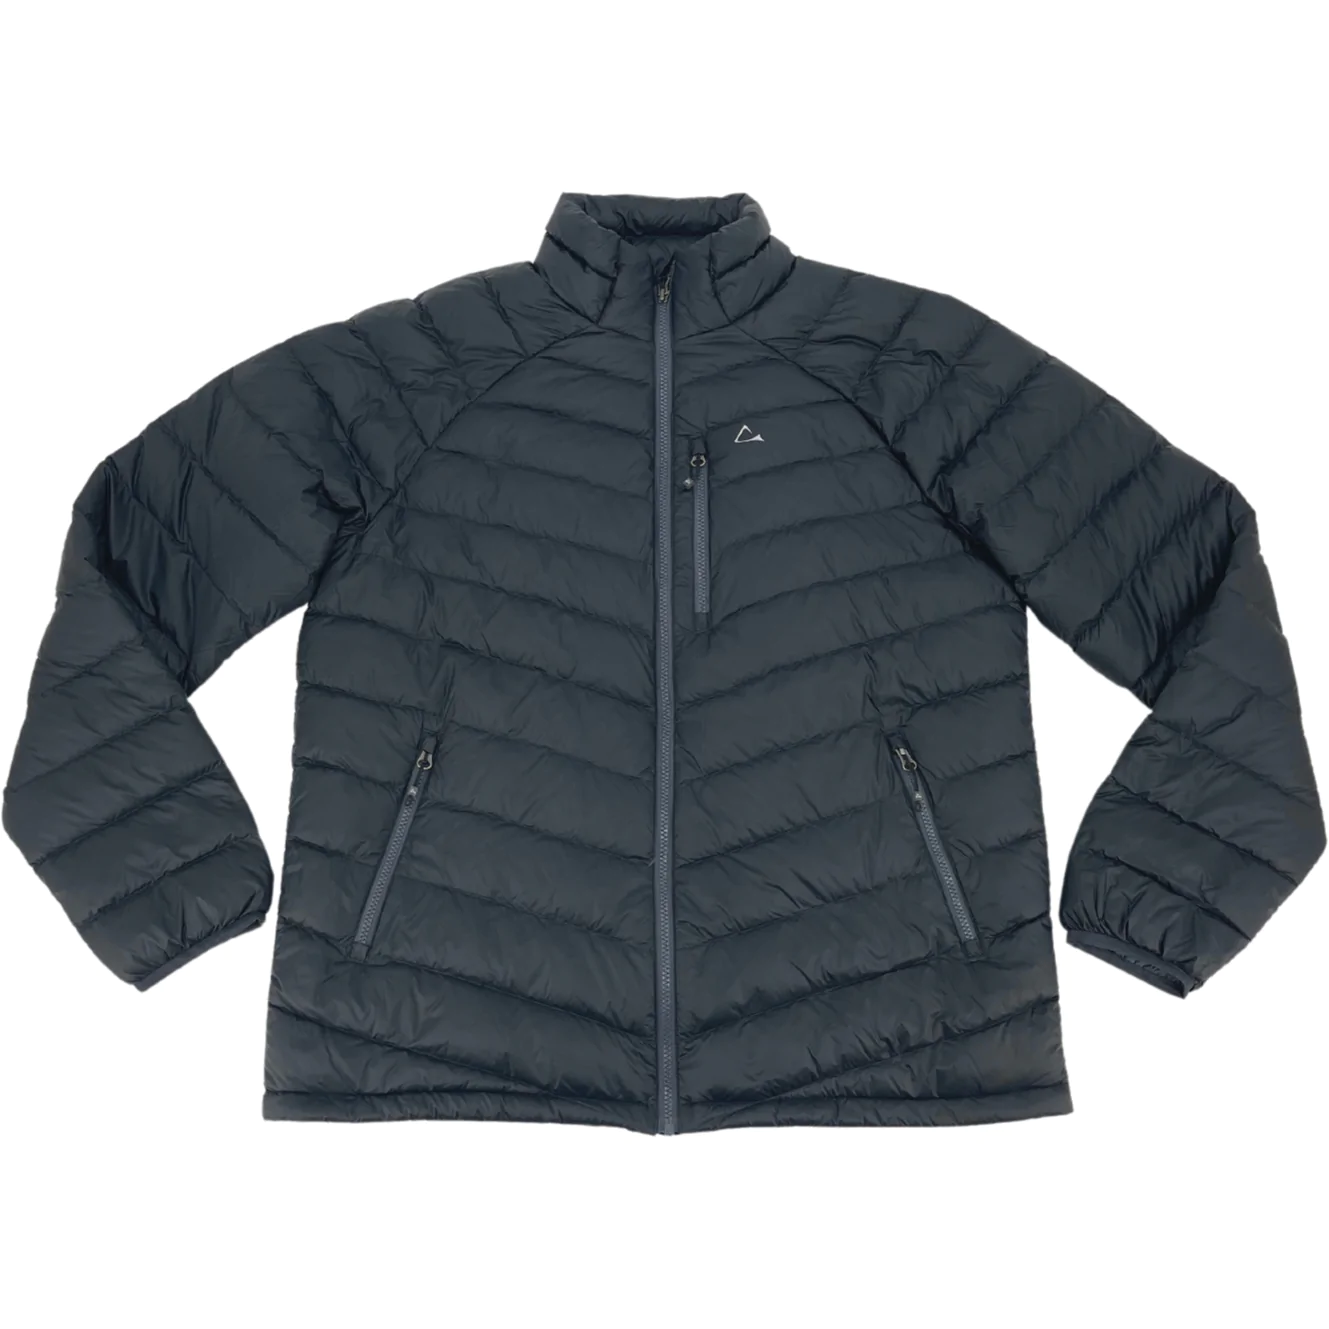 Paradox Men's Lightweight Jacket / Puffer Style Jacket / Black / Size XLarge